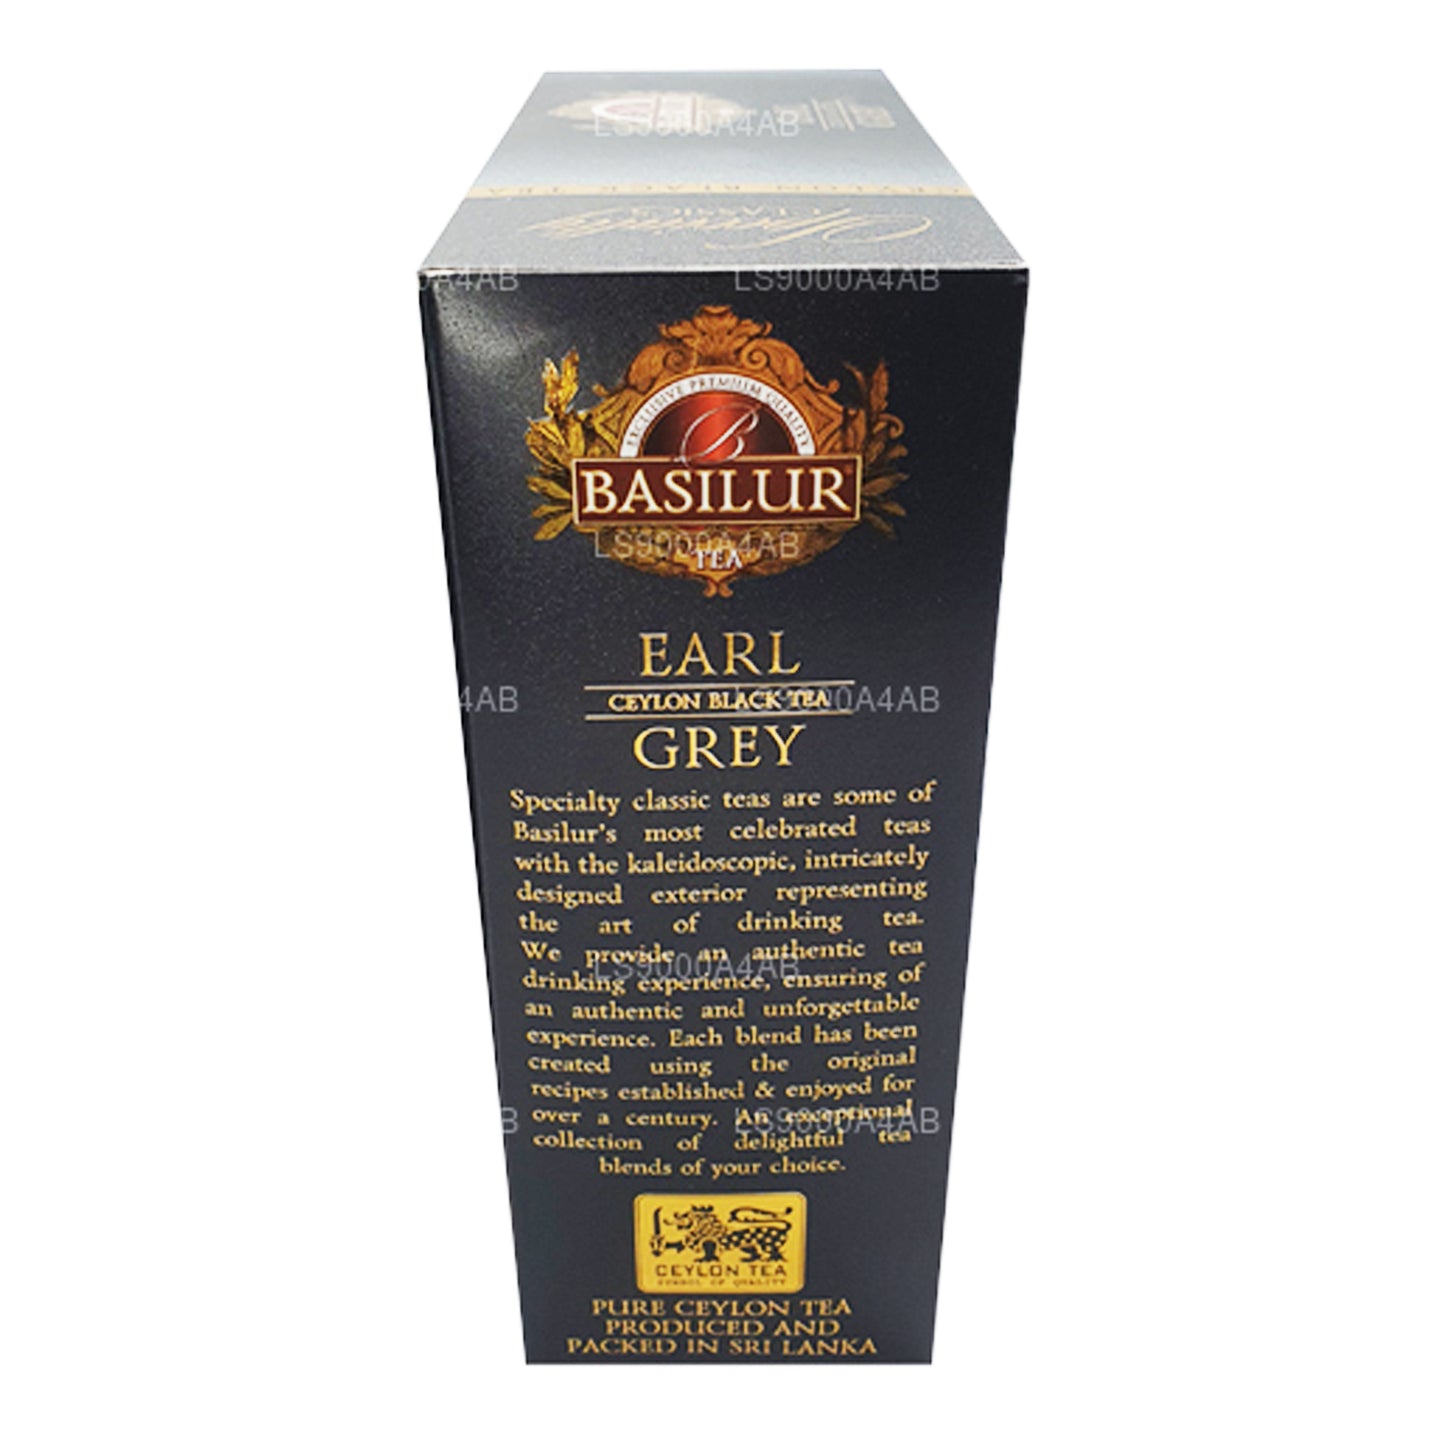 Basilur Speciality Classics Earl Grey Ceylon svart te (200g) 100 tepåsar